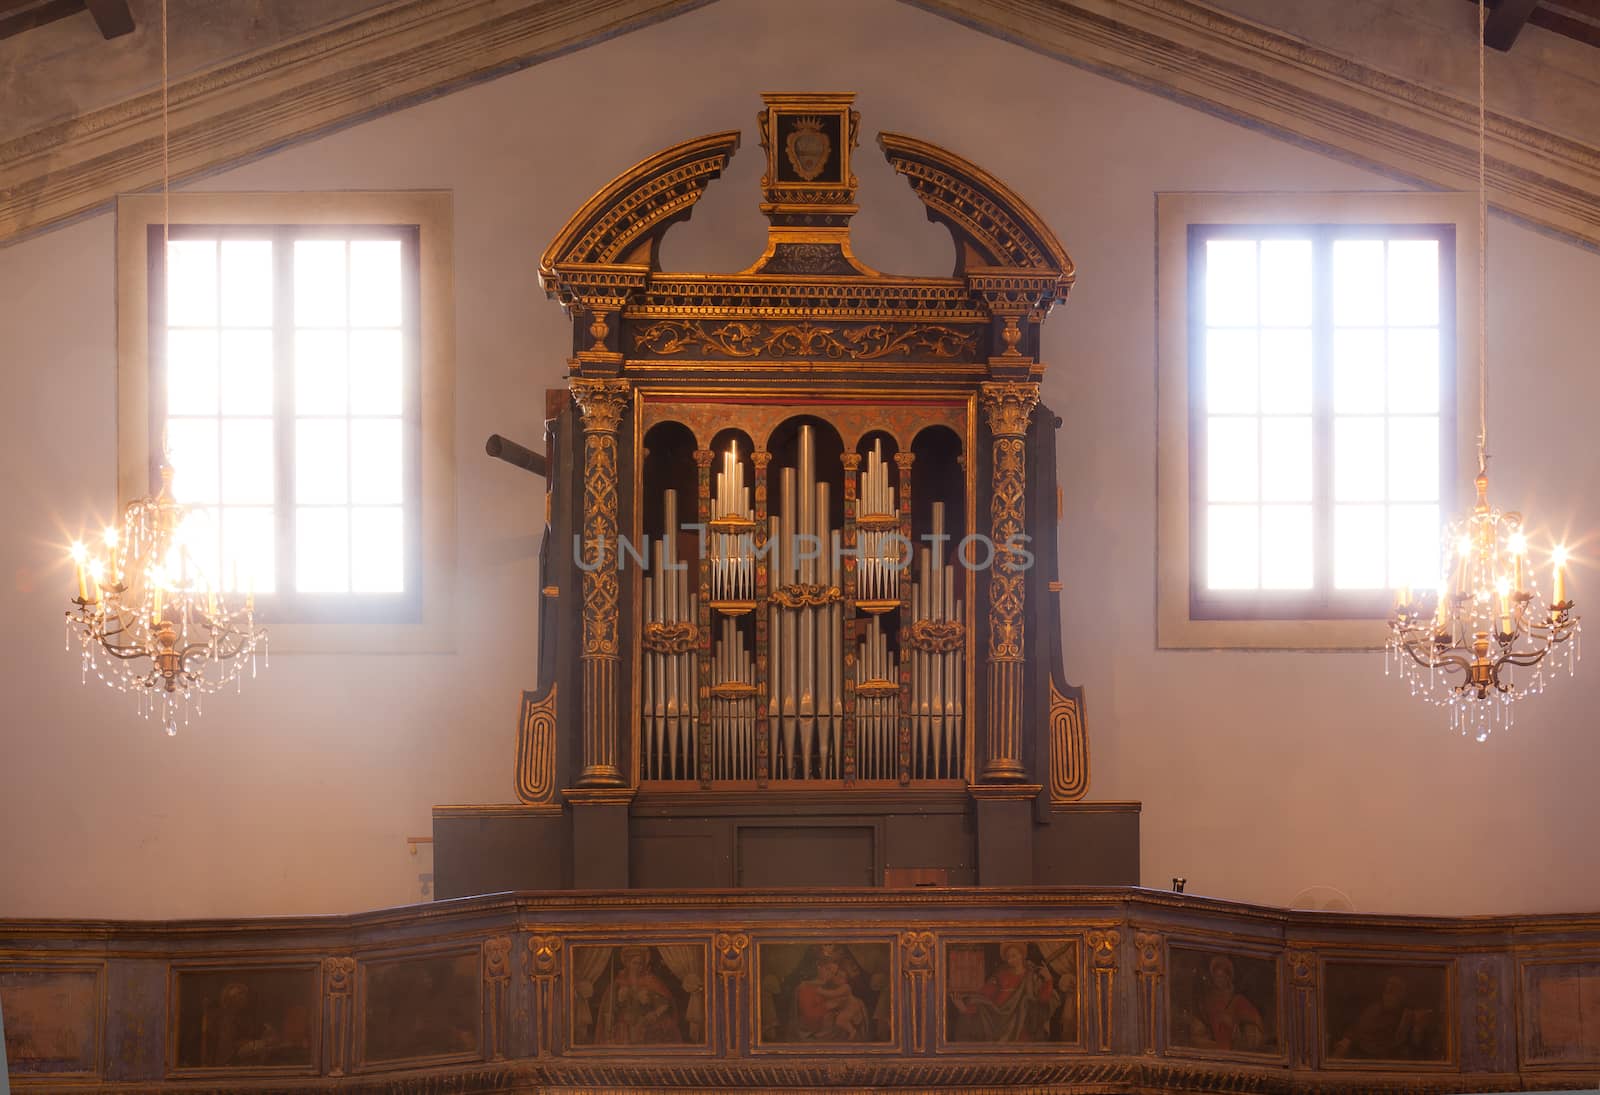 Old Chgurch Organ with two windows